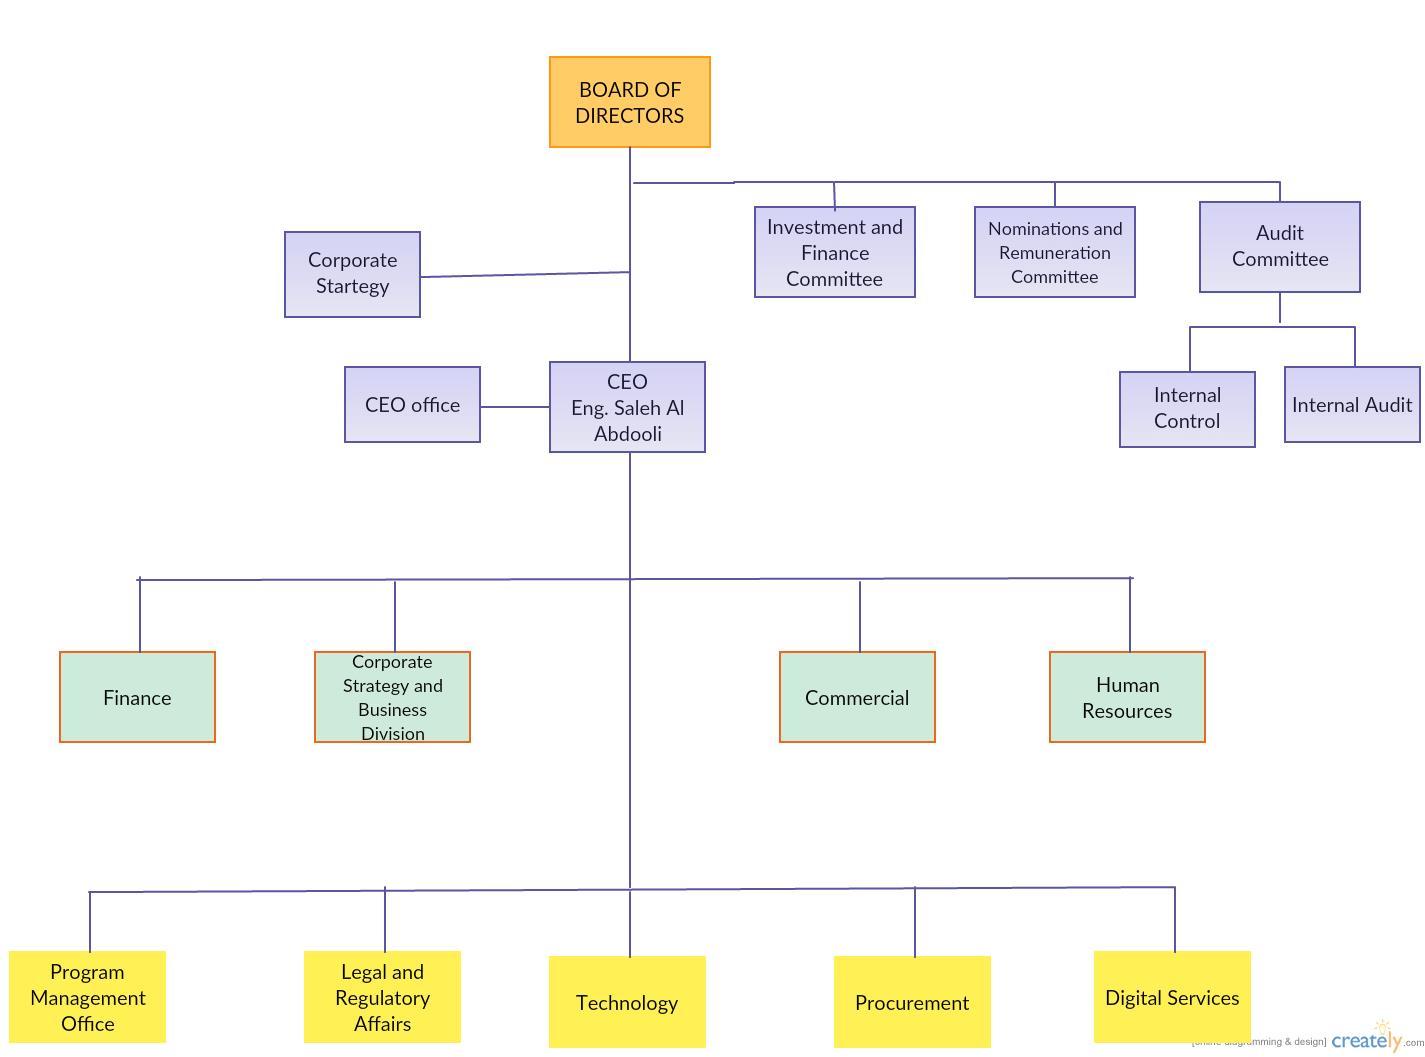 The Organizational Structure of Etisalat